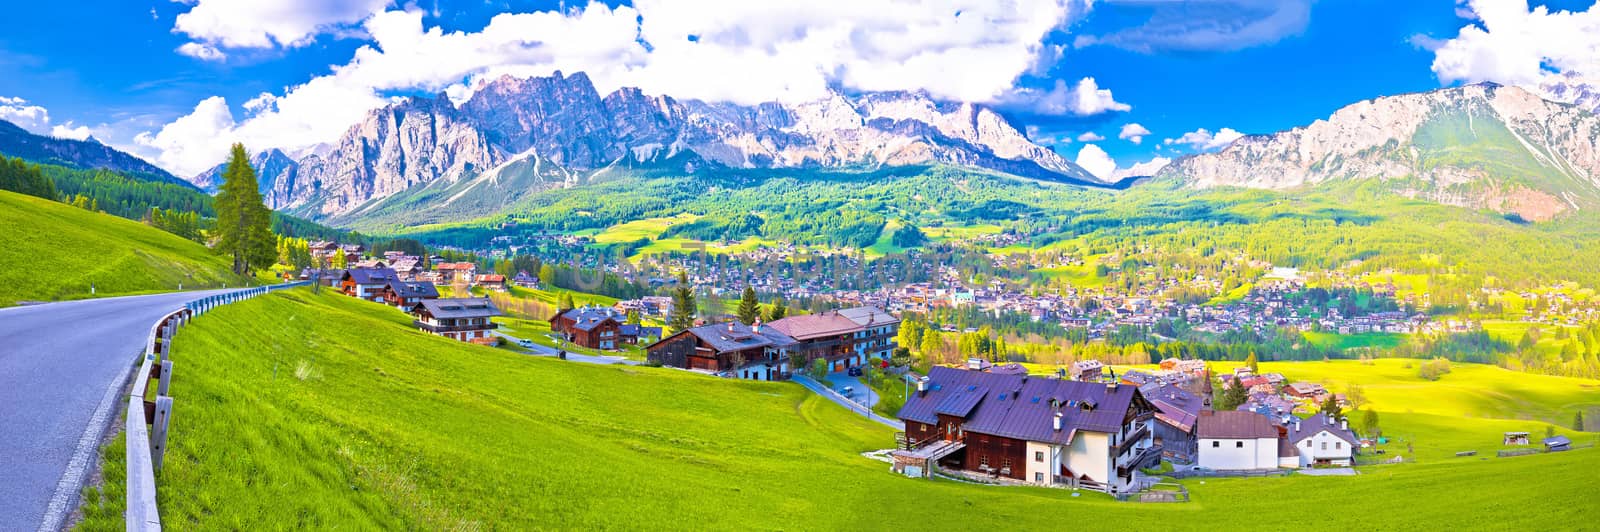 Beautiful town of Cortina d' Ampezzo in Dolomites Alps panoramic view, Veneto region of Italy